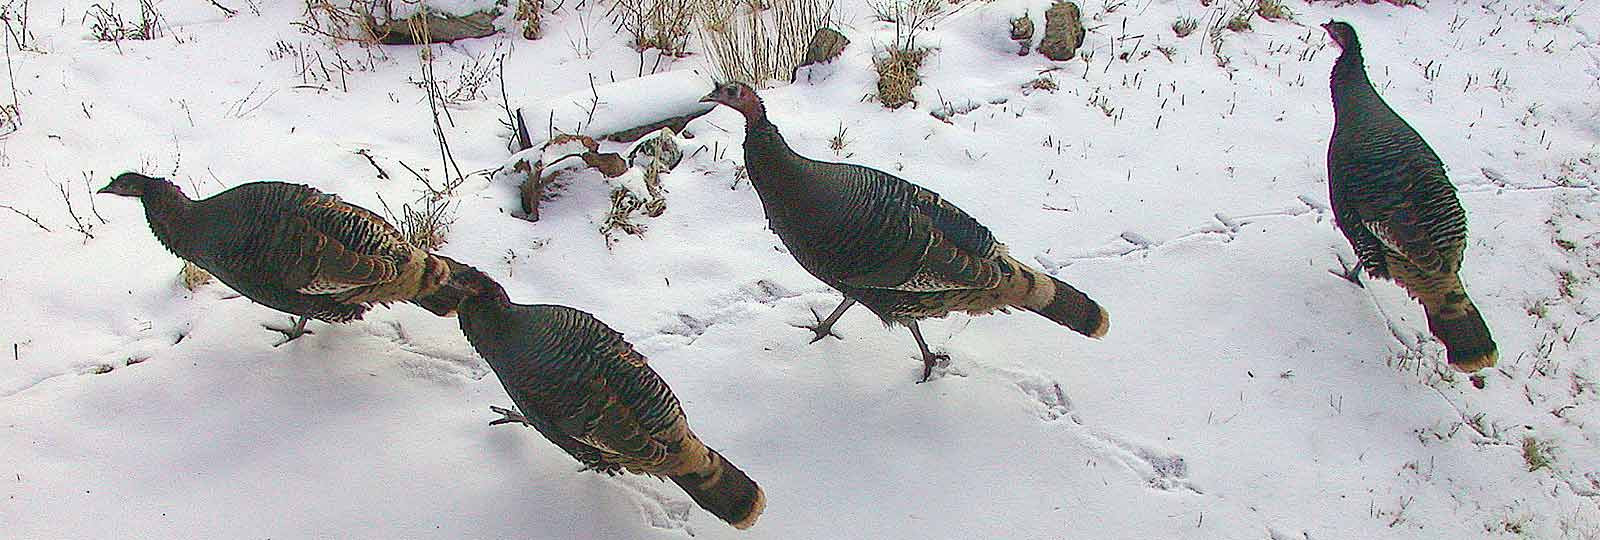 Wild turkeys in winter